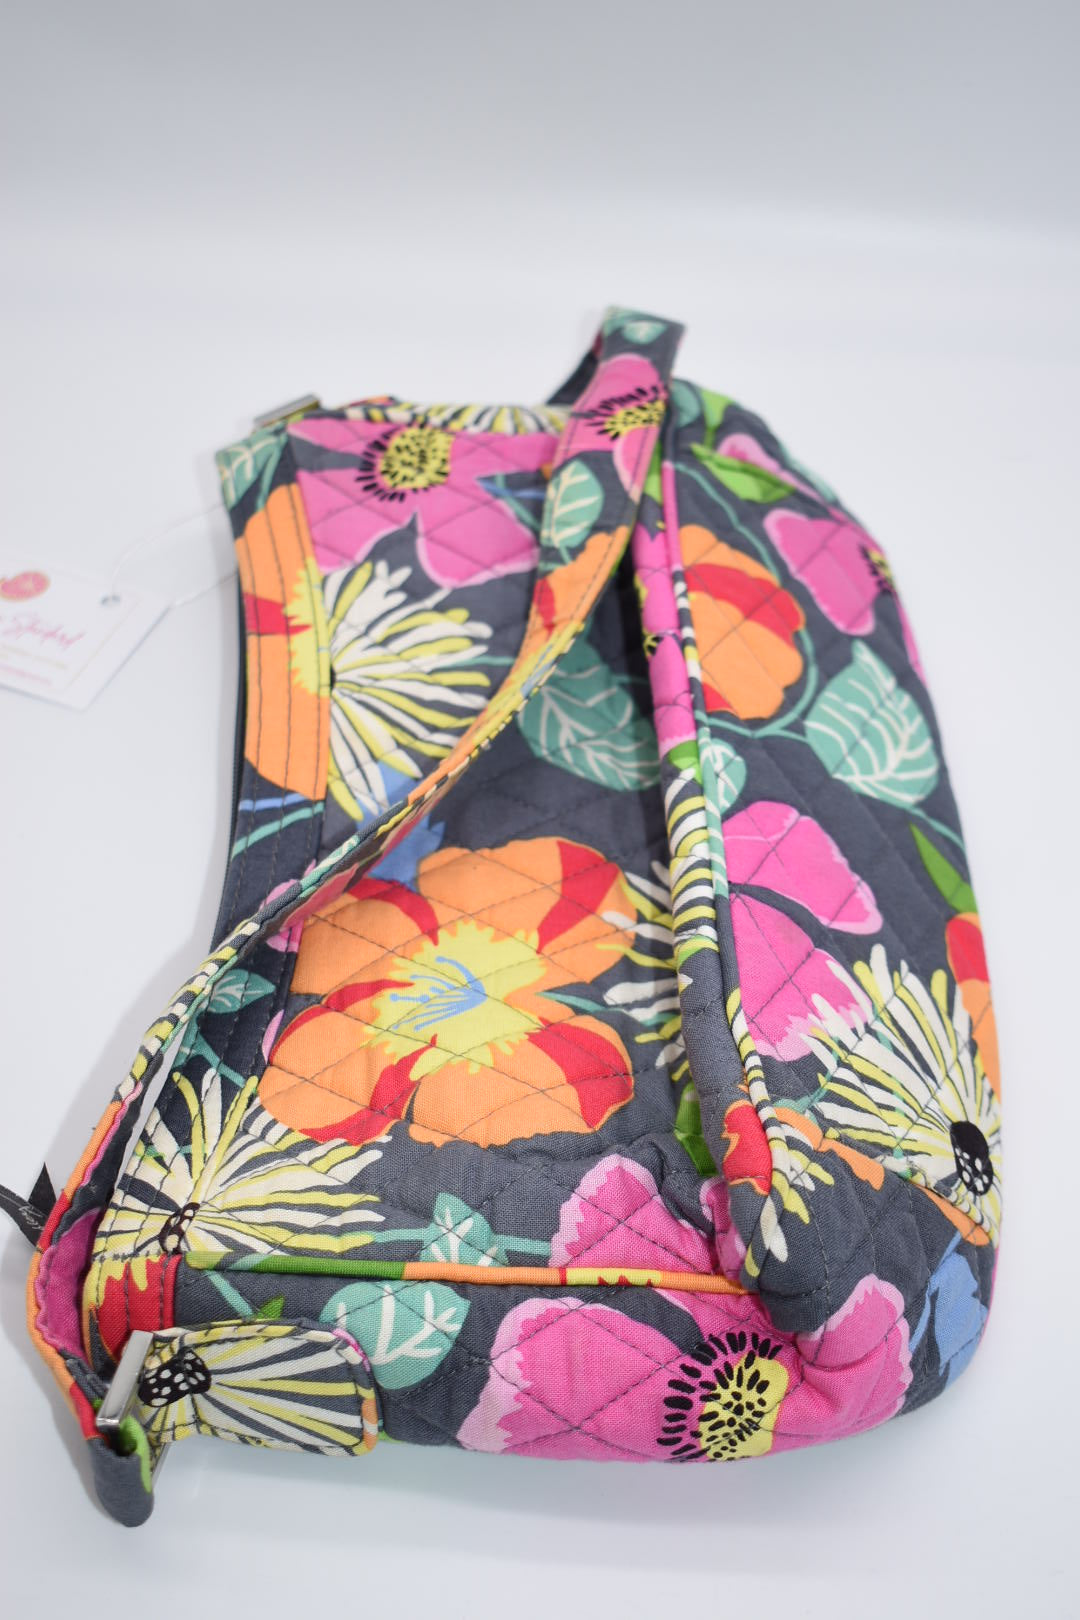 Vera Bradley Cassidy Shoulder Bag in "Jazzy Blooms"